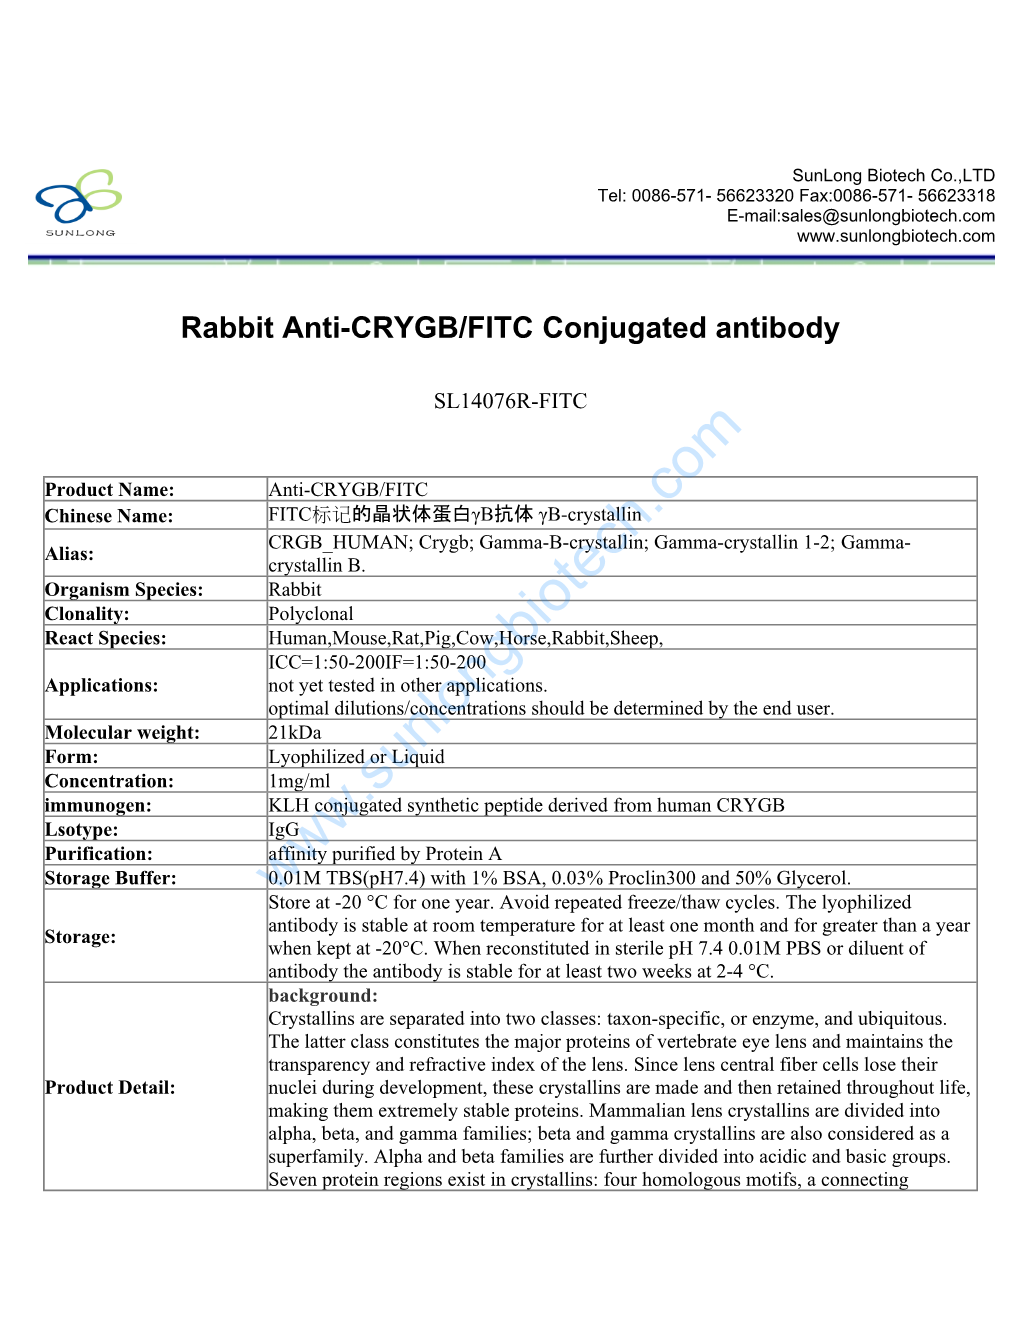 Rabbit Anti-CRYGB/FITC Conjugated Antibody